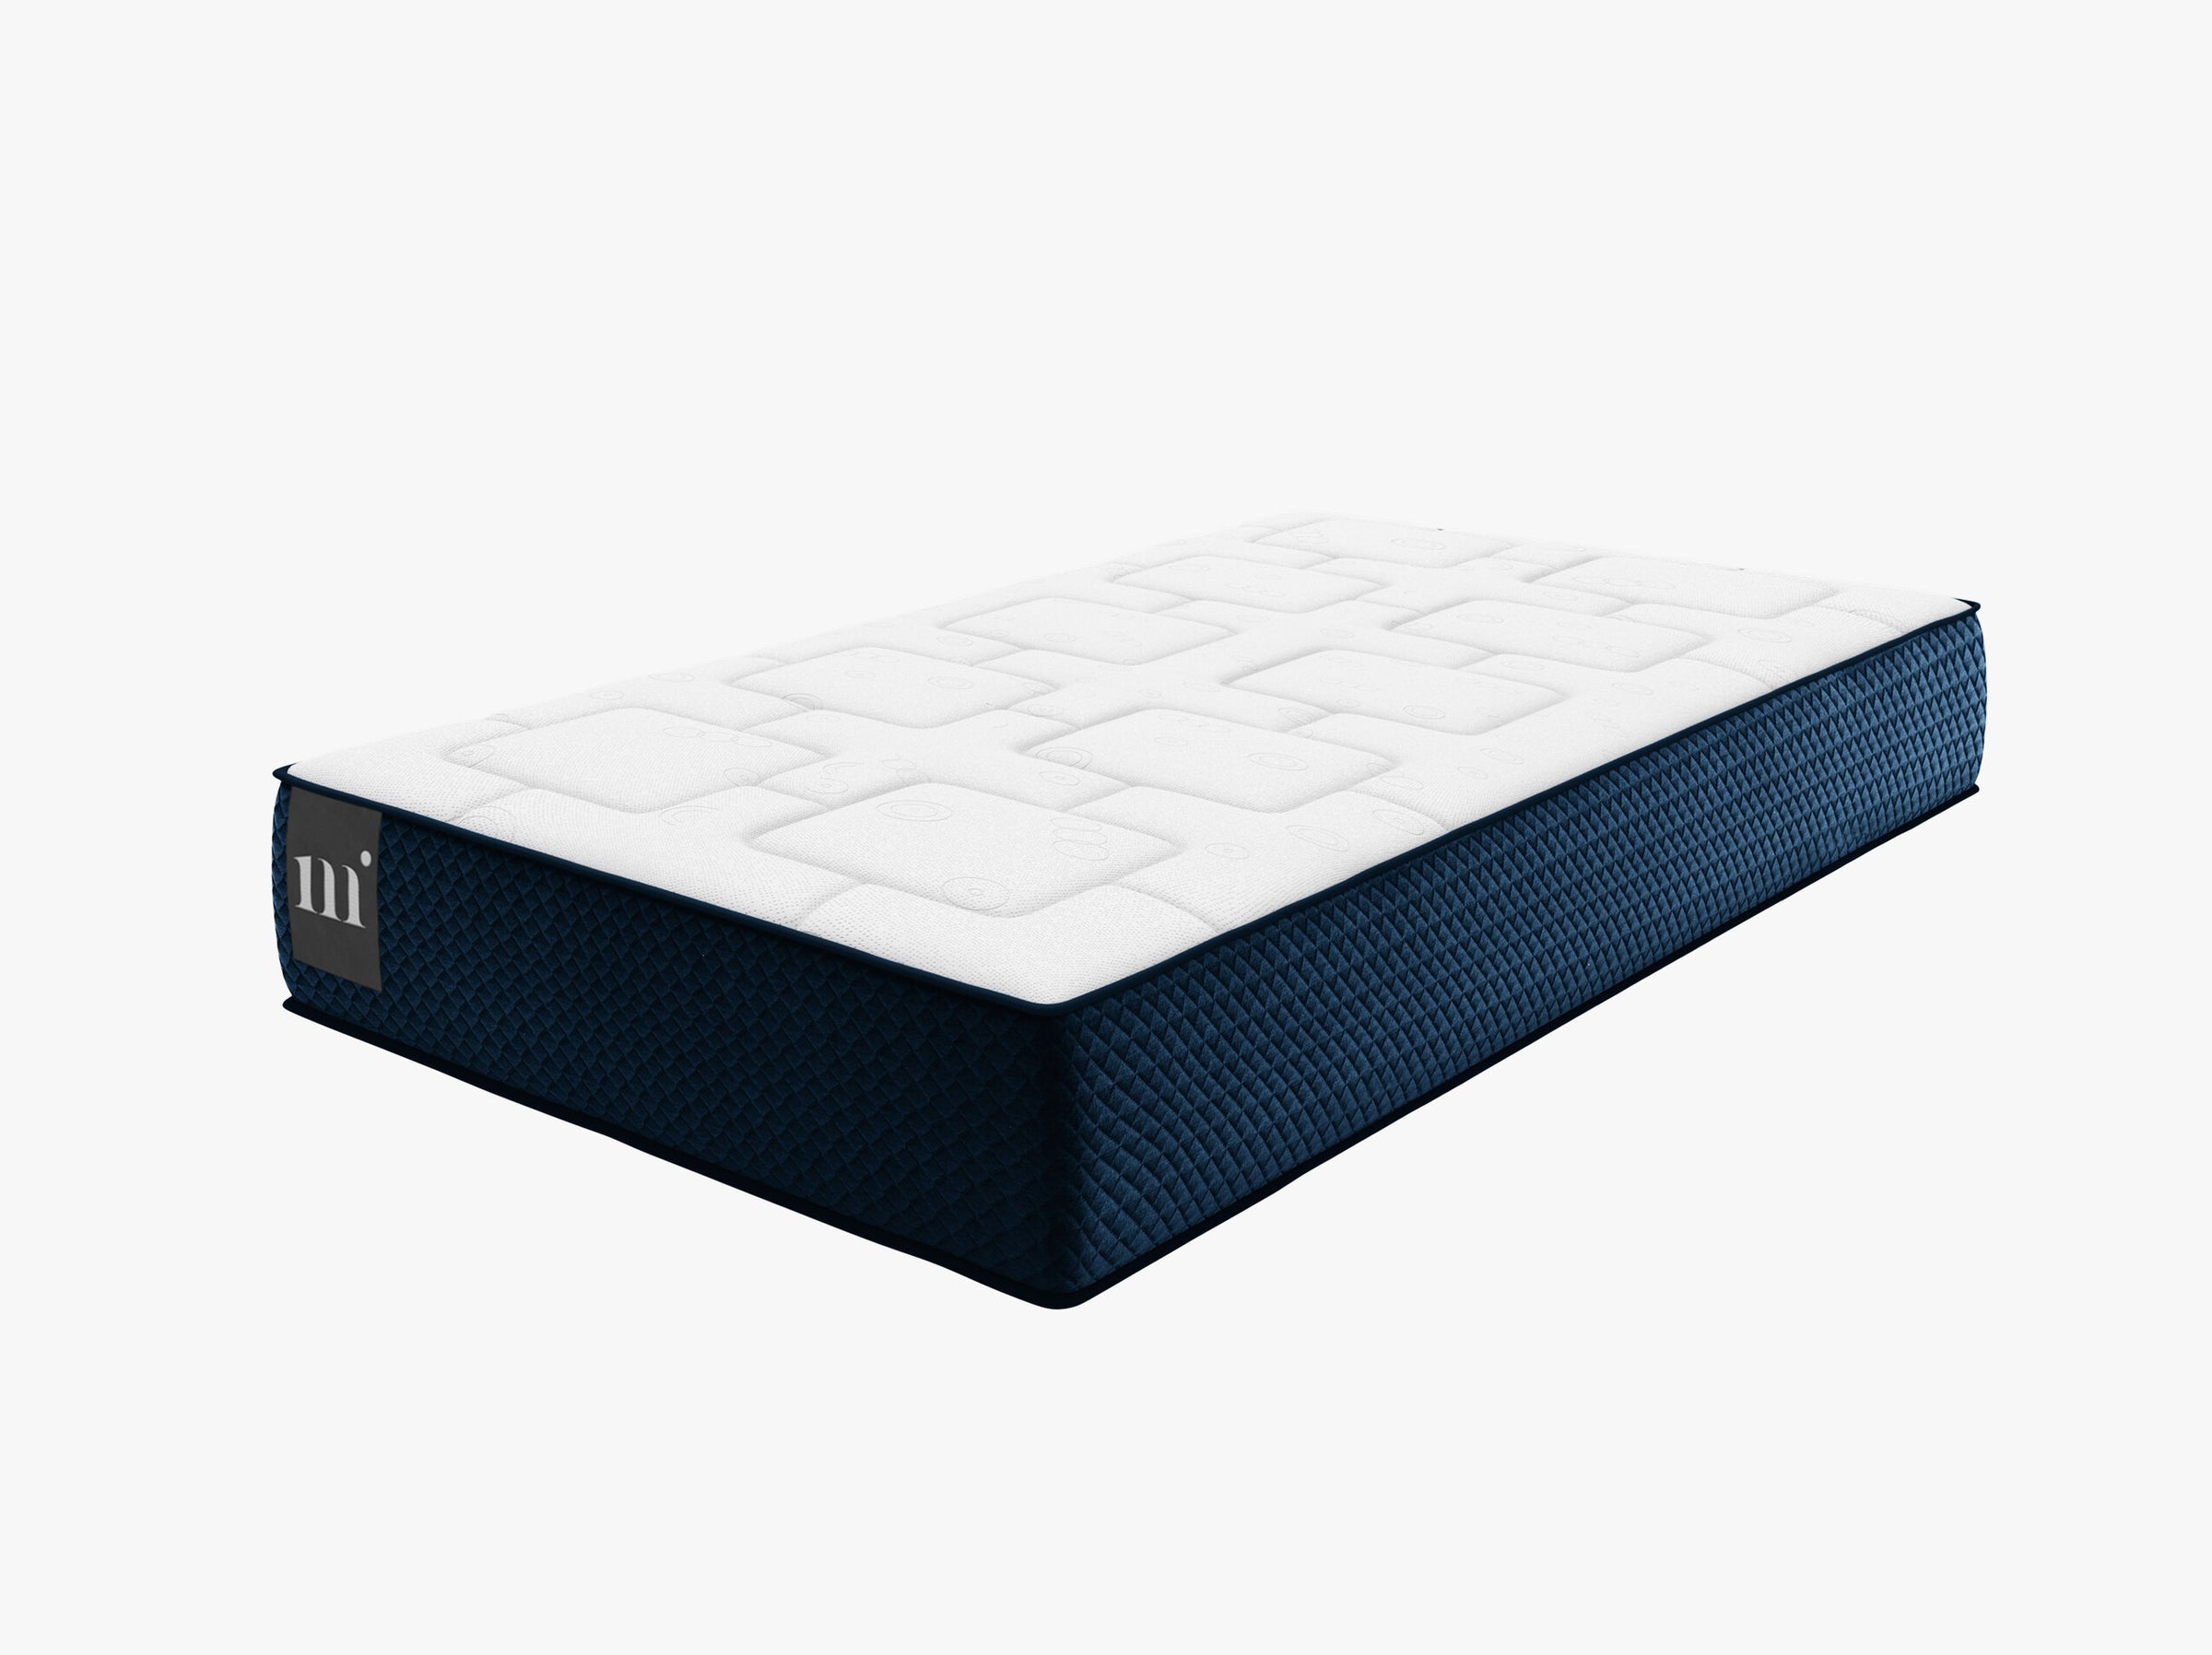 Mundi beds & mattresses structured fabric white and blue